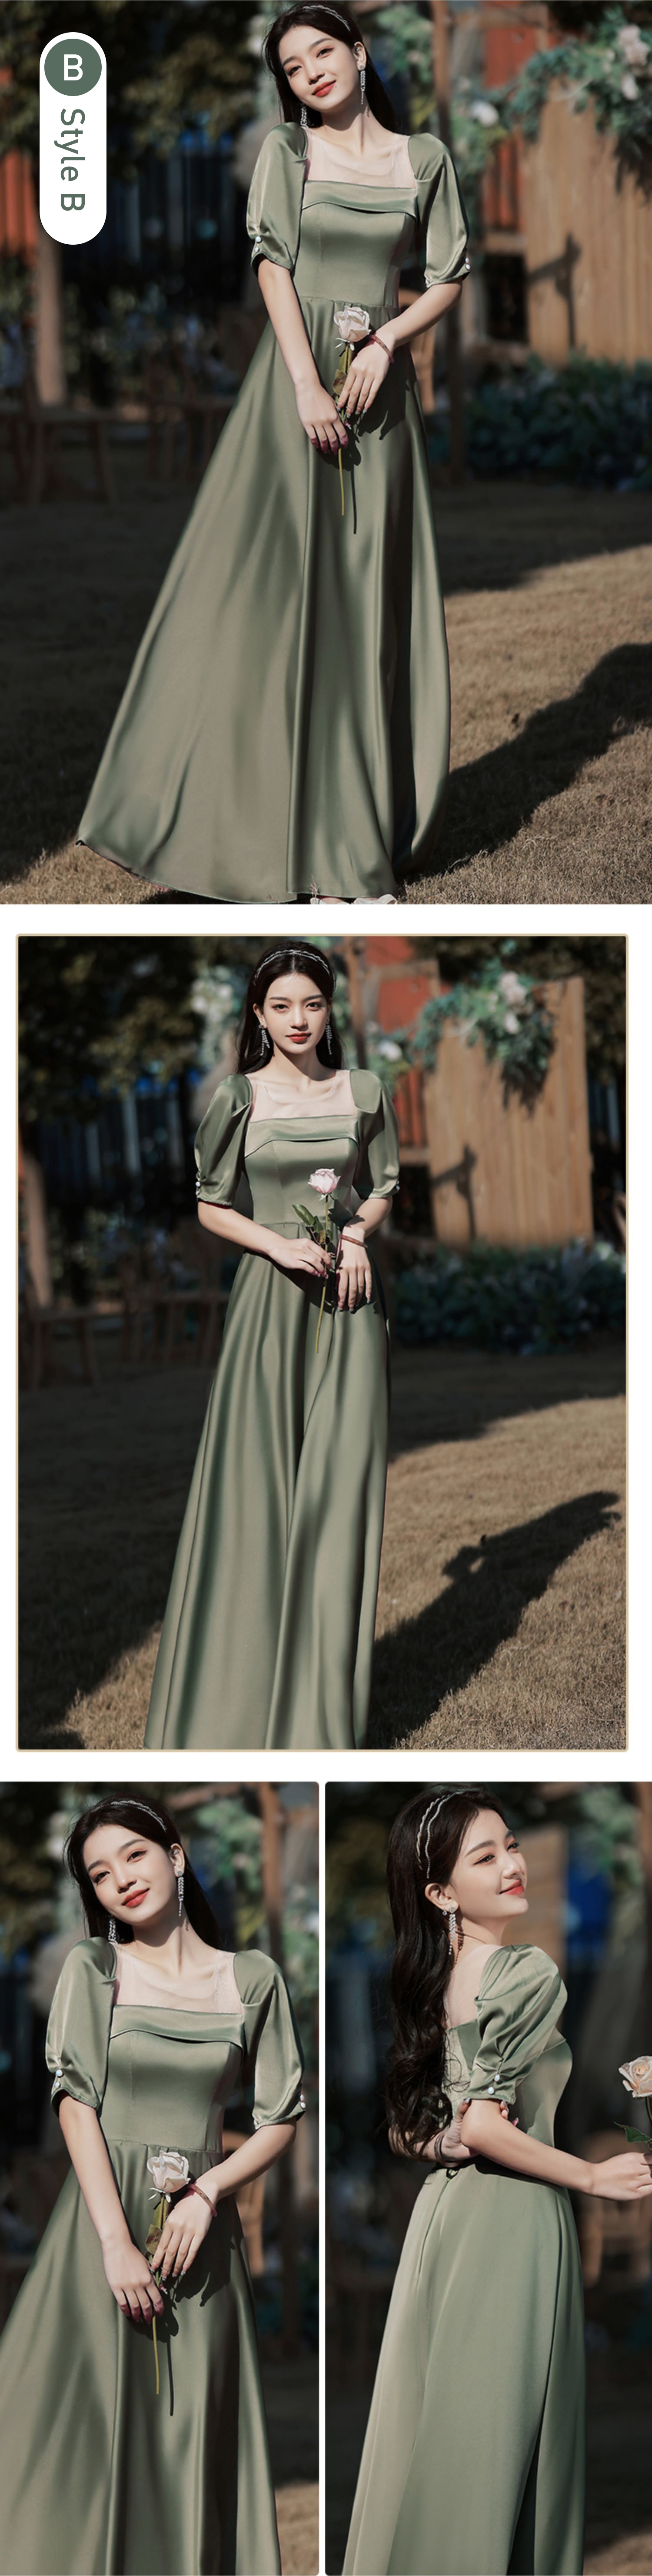 Green-Satin-Bridesmaid-Maxi-Dress-Boho-Wedding-Guest-Party-Outfit18.jpg